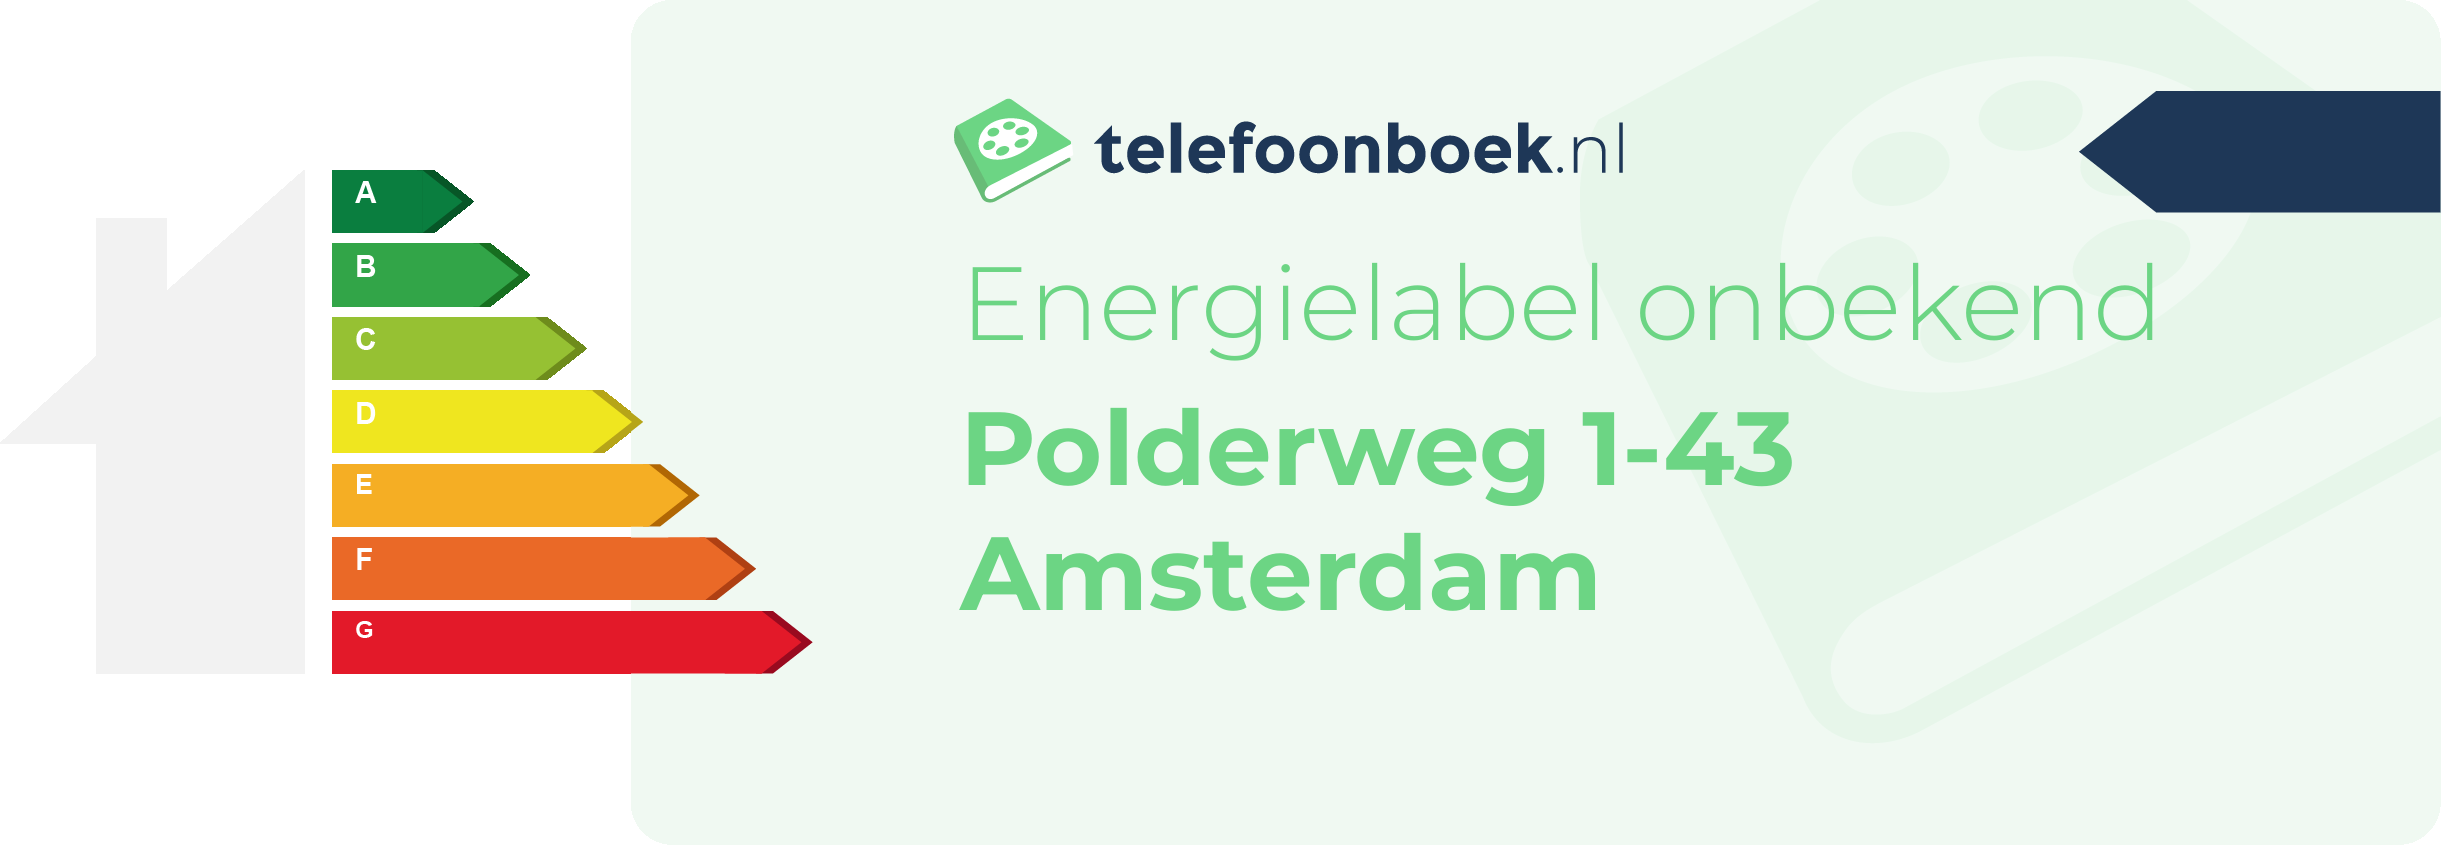 Energielabel Polderweg 1-43 Amsterdam